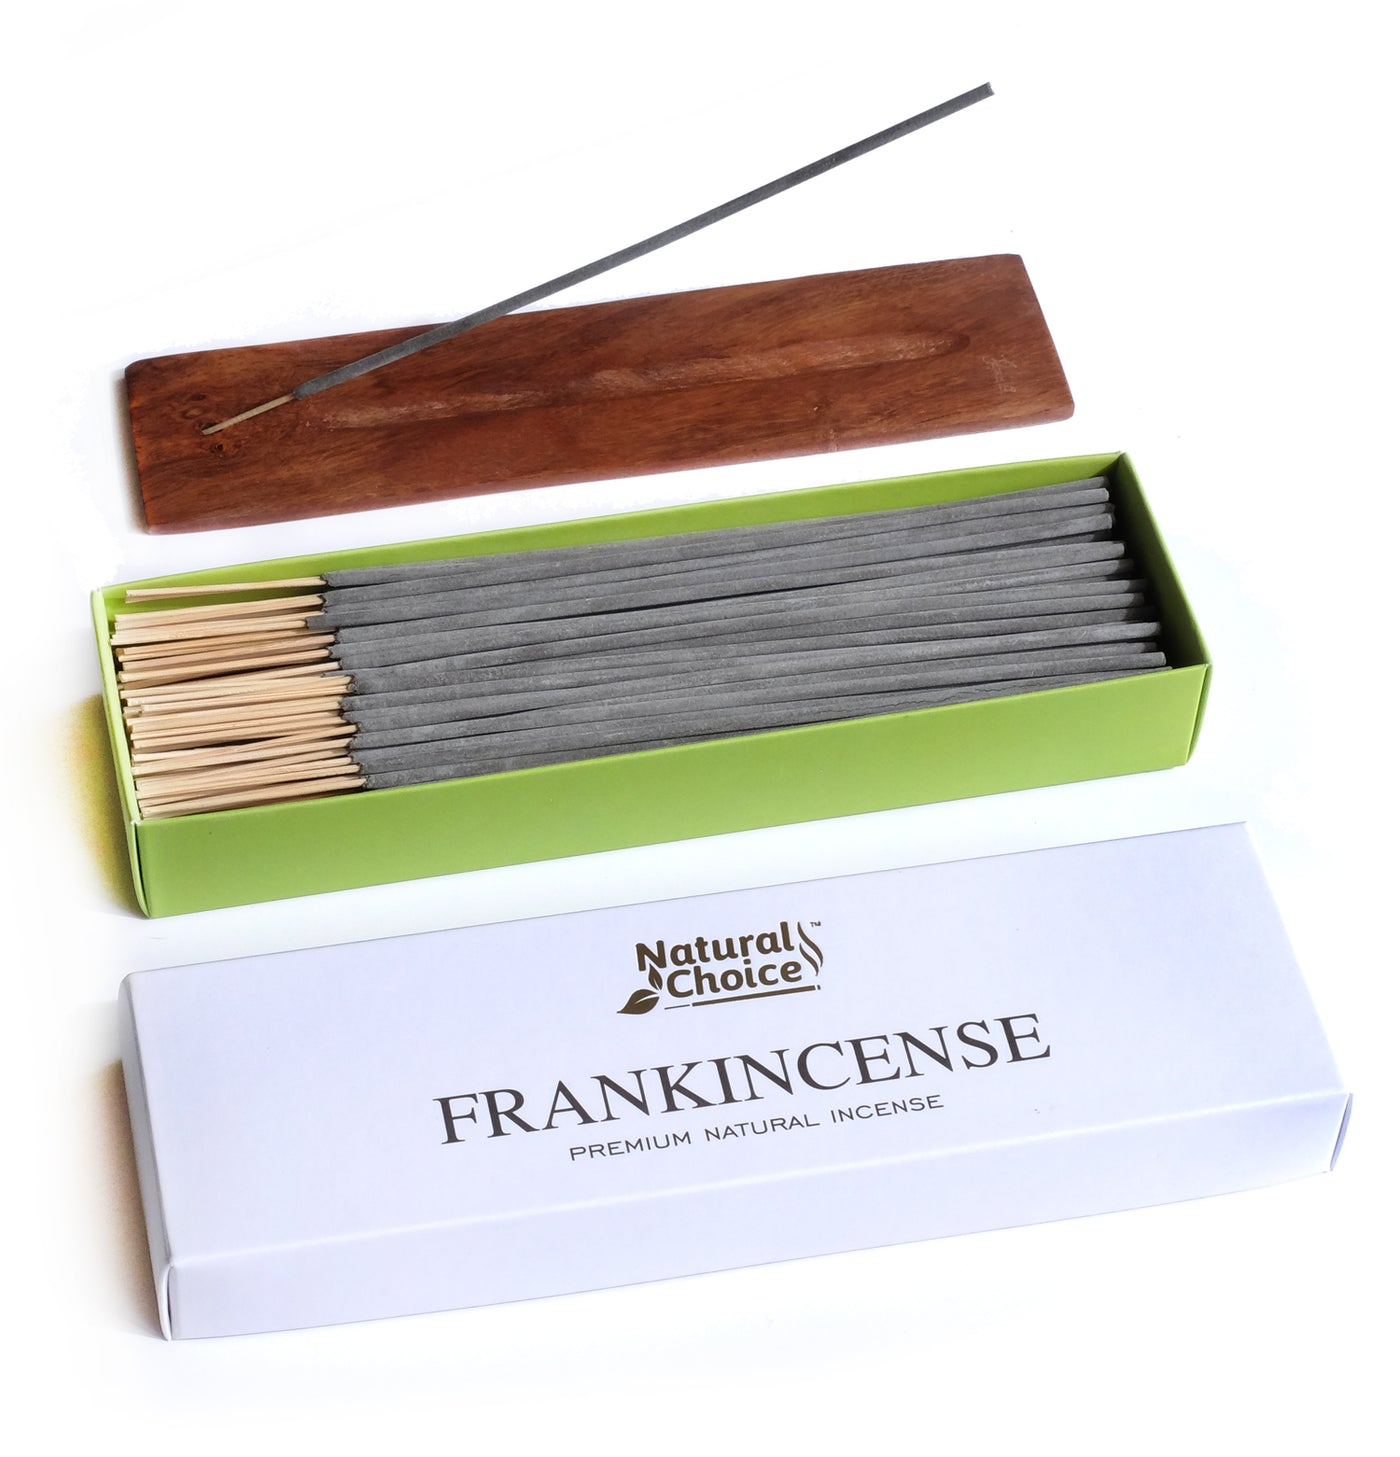 Frankincense Premium Natural Incense Gift Box with Incense Burner (150 sticks)